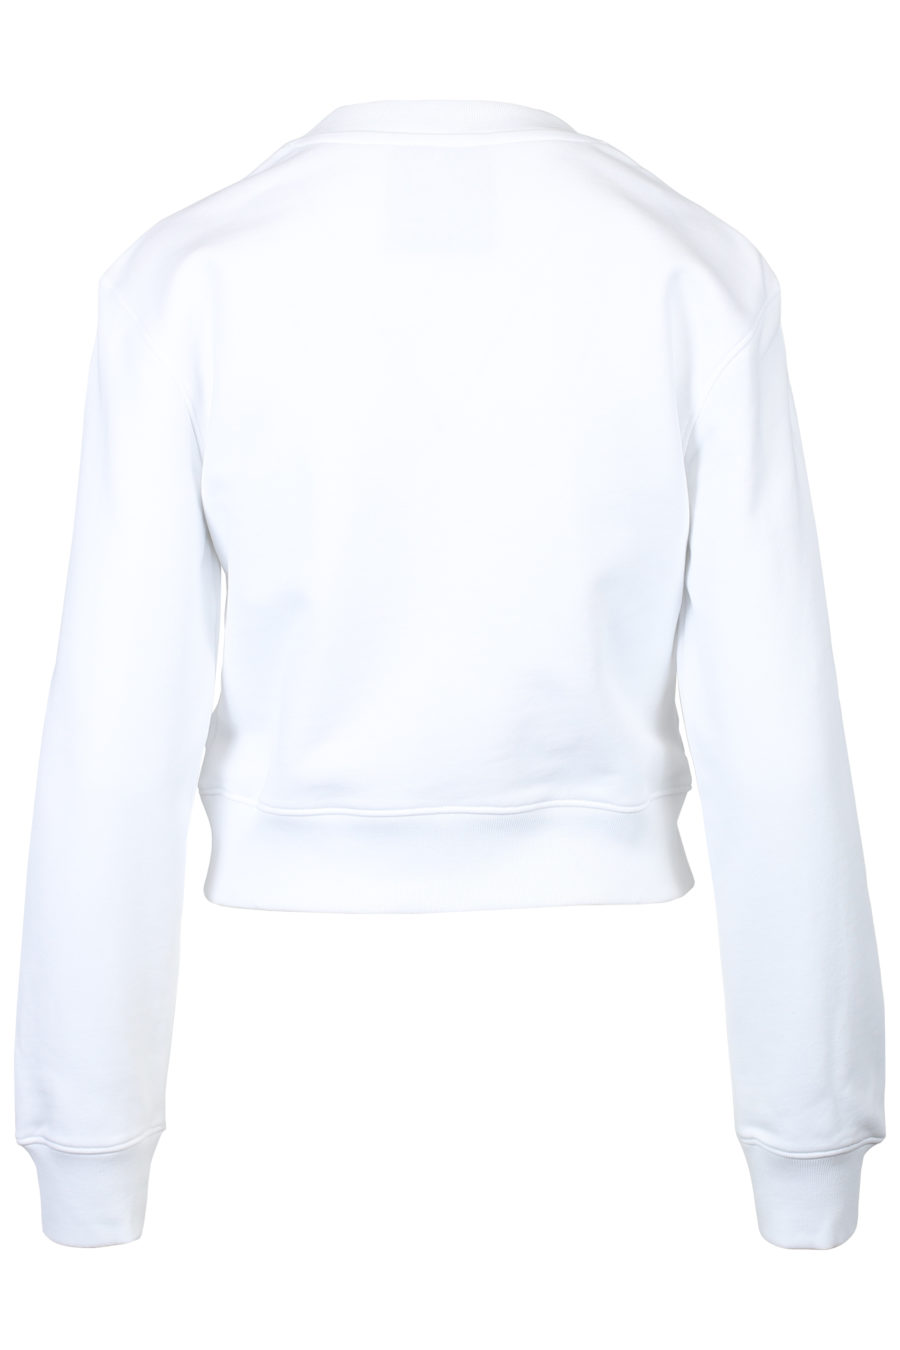 White sweatshirt with large "Couture" logo - IMG 2089